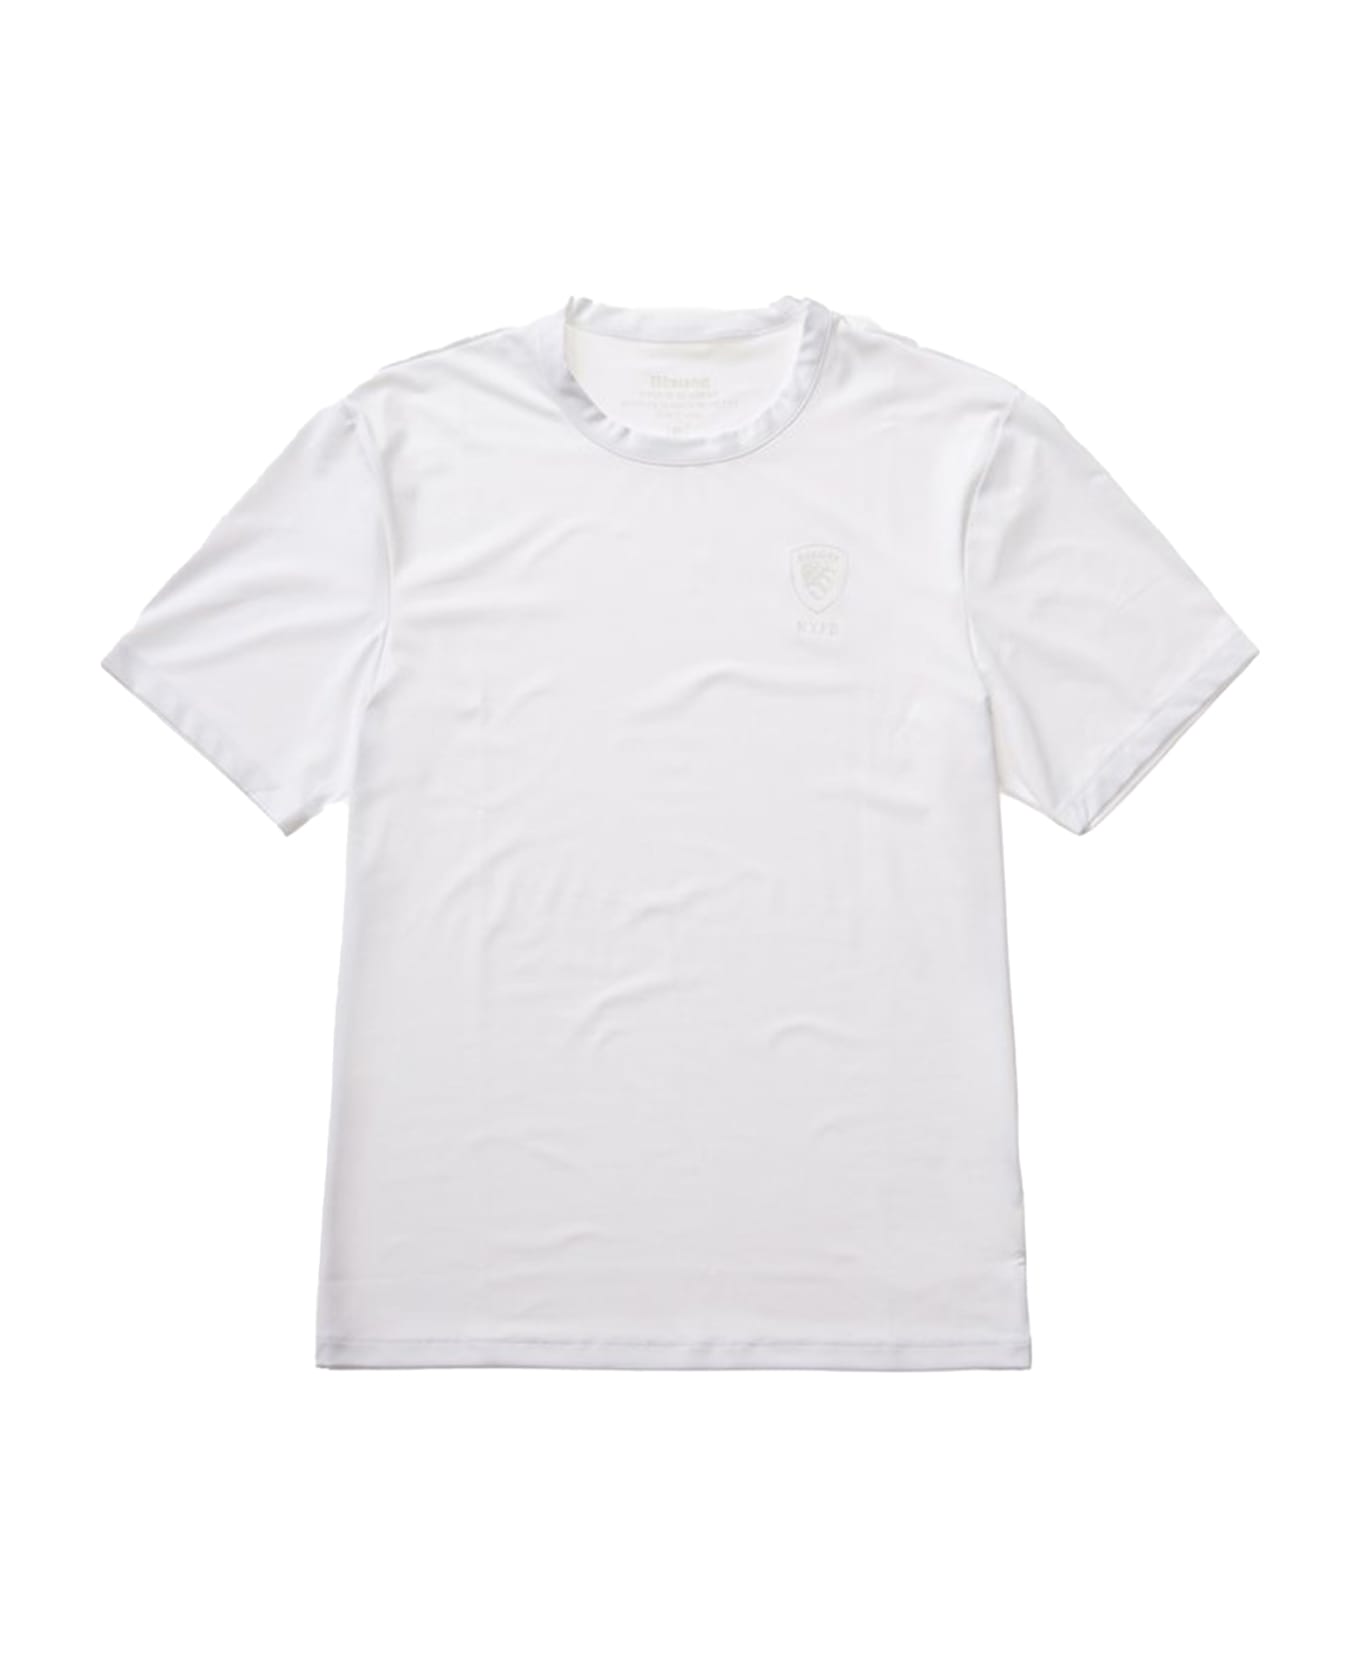 Blauer White Jerseyt-shirt - BIANCO OTTICO